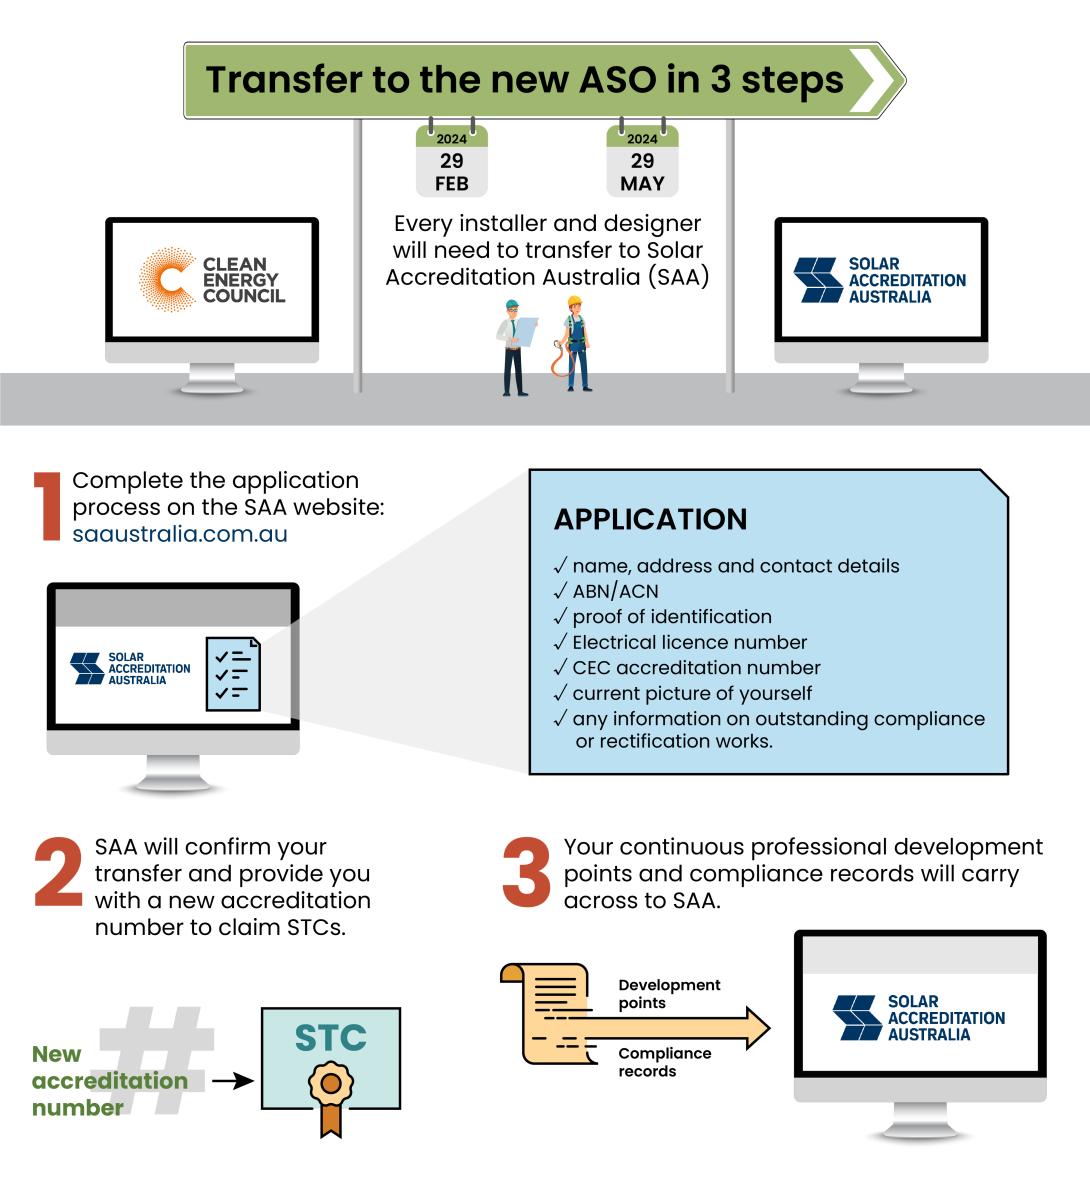 Steps to transfer to the new accreditation scheme operator Solar Accreditation Australia.